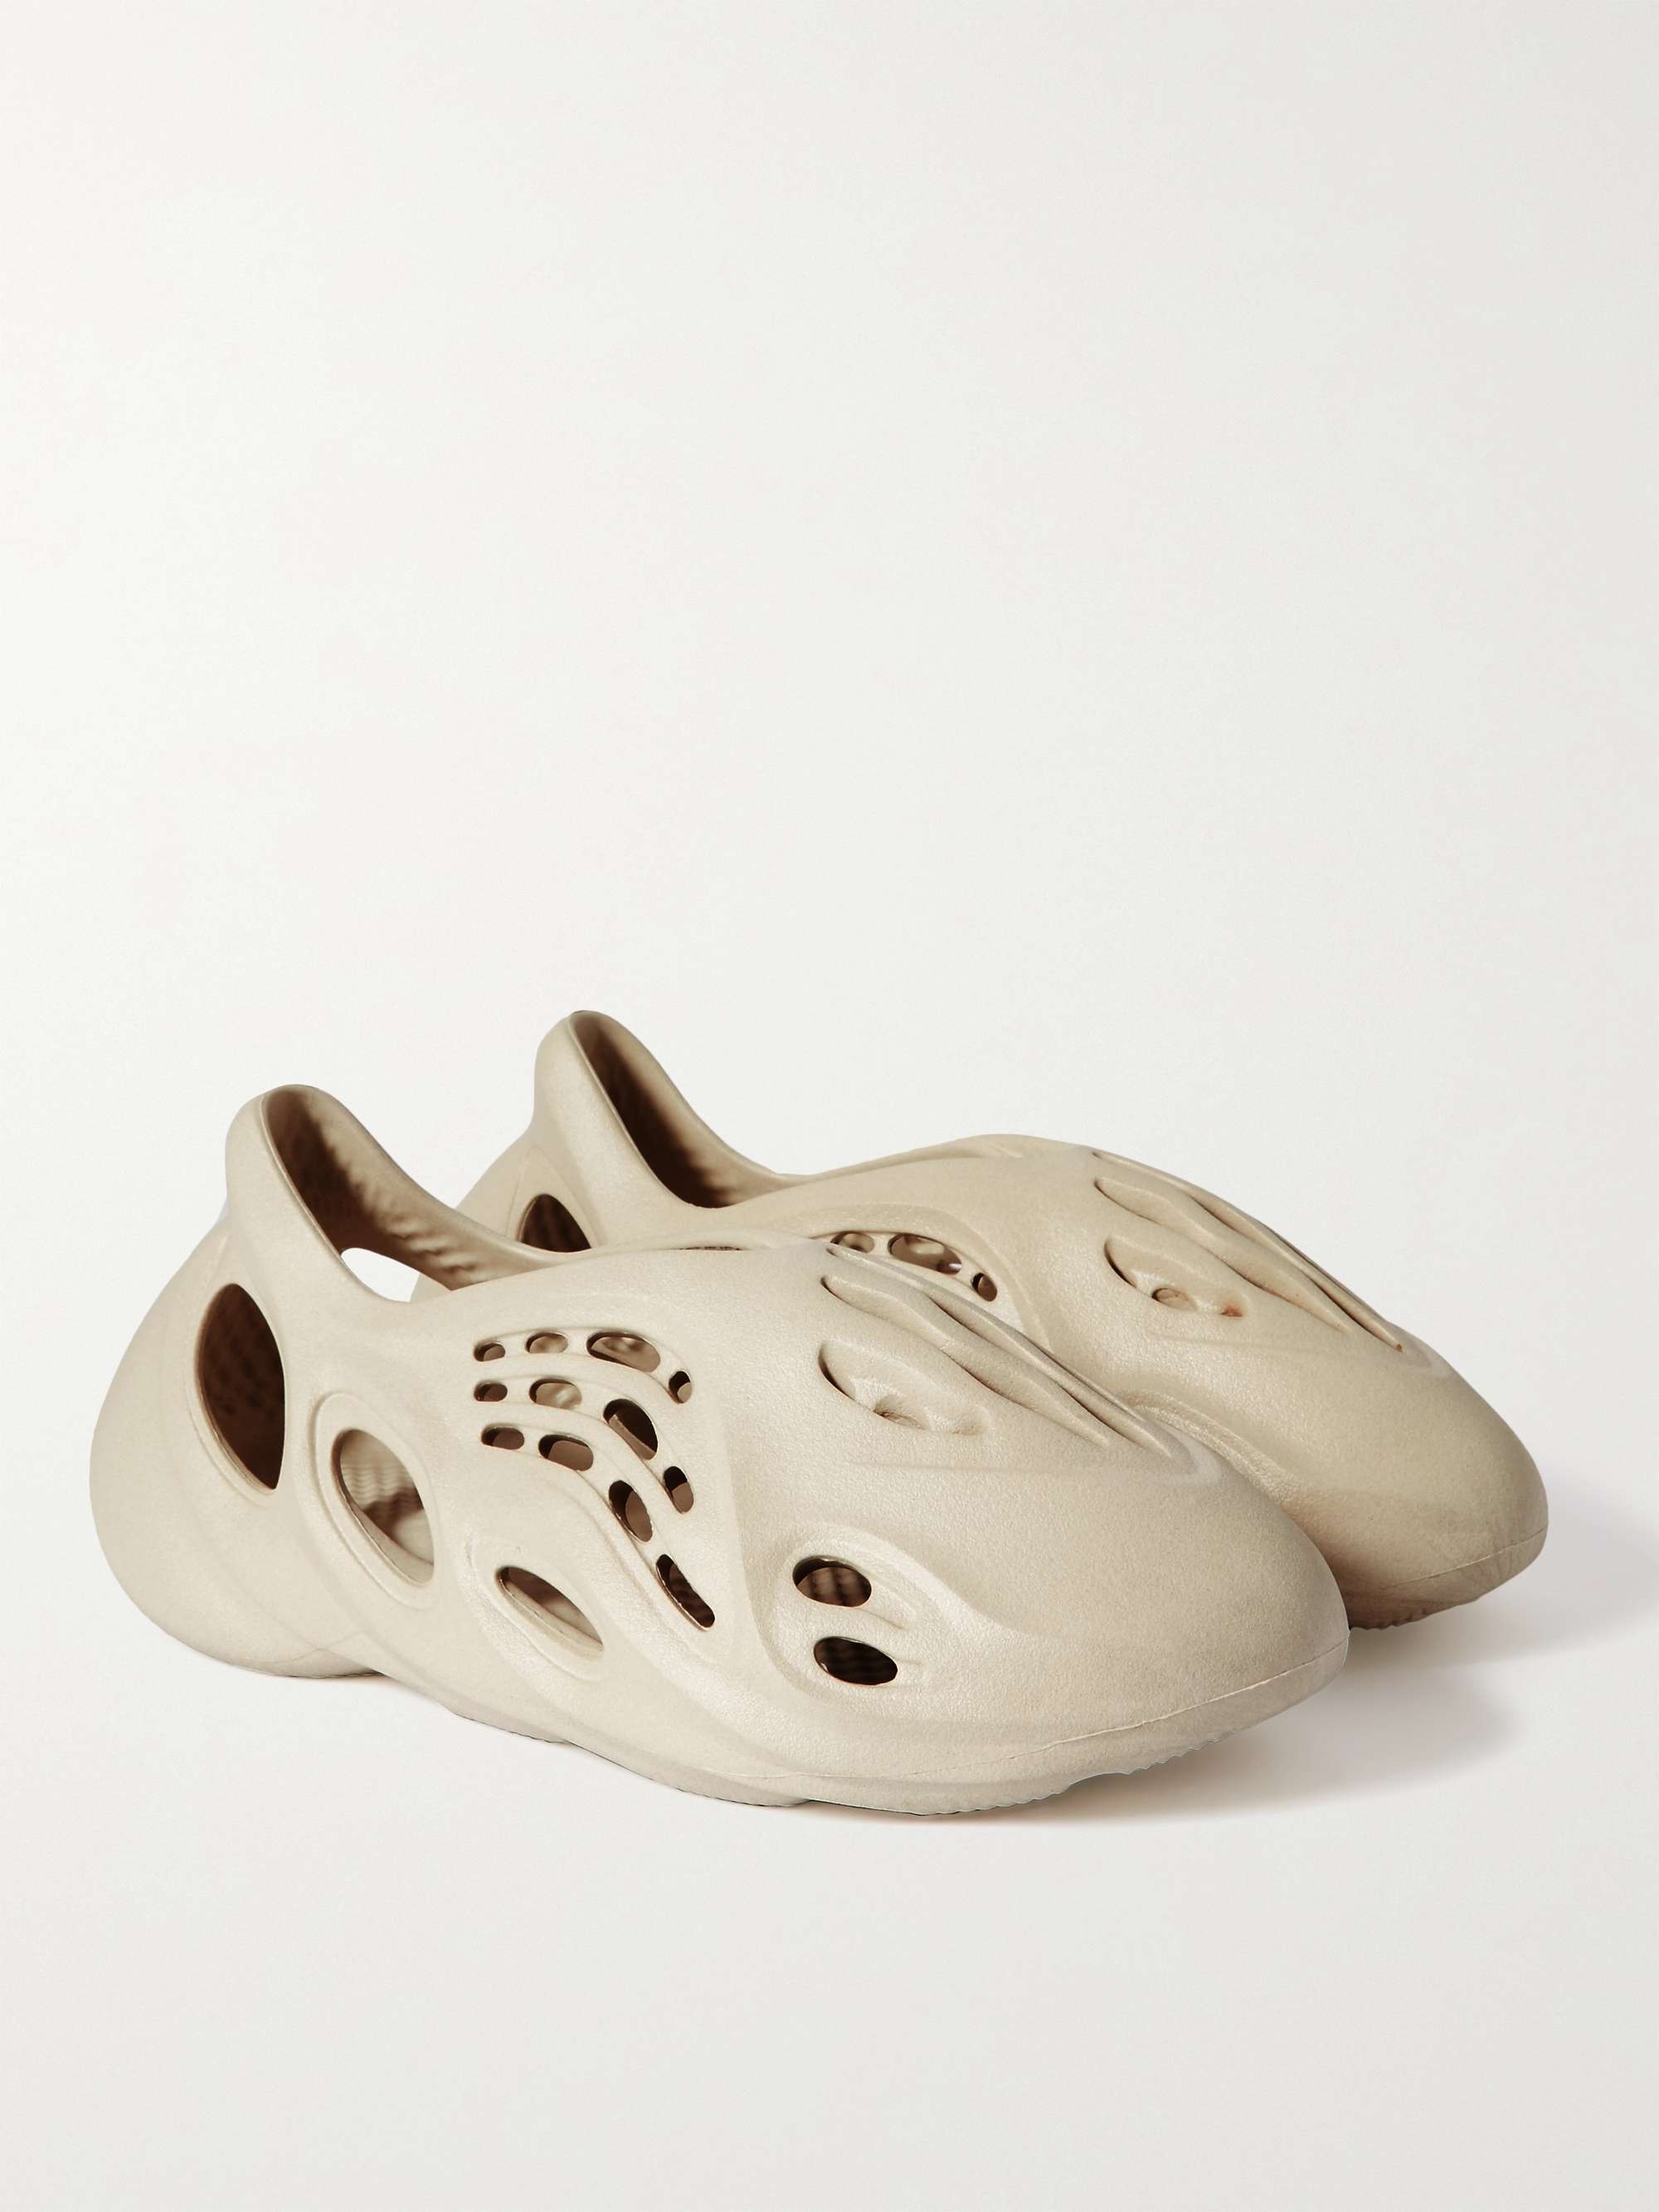 ADIDAS ORIGINALS Yeezy Foam Runner EVA Slip-On Sneakers for Men | MR PORTER